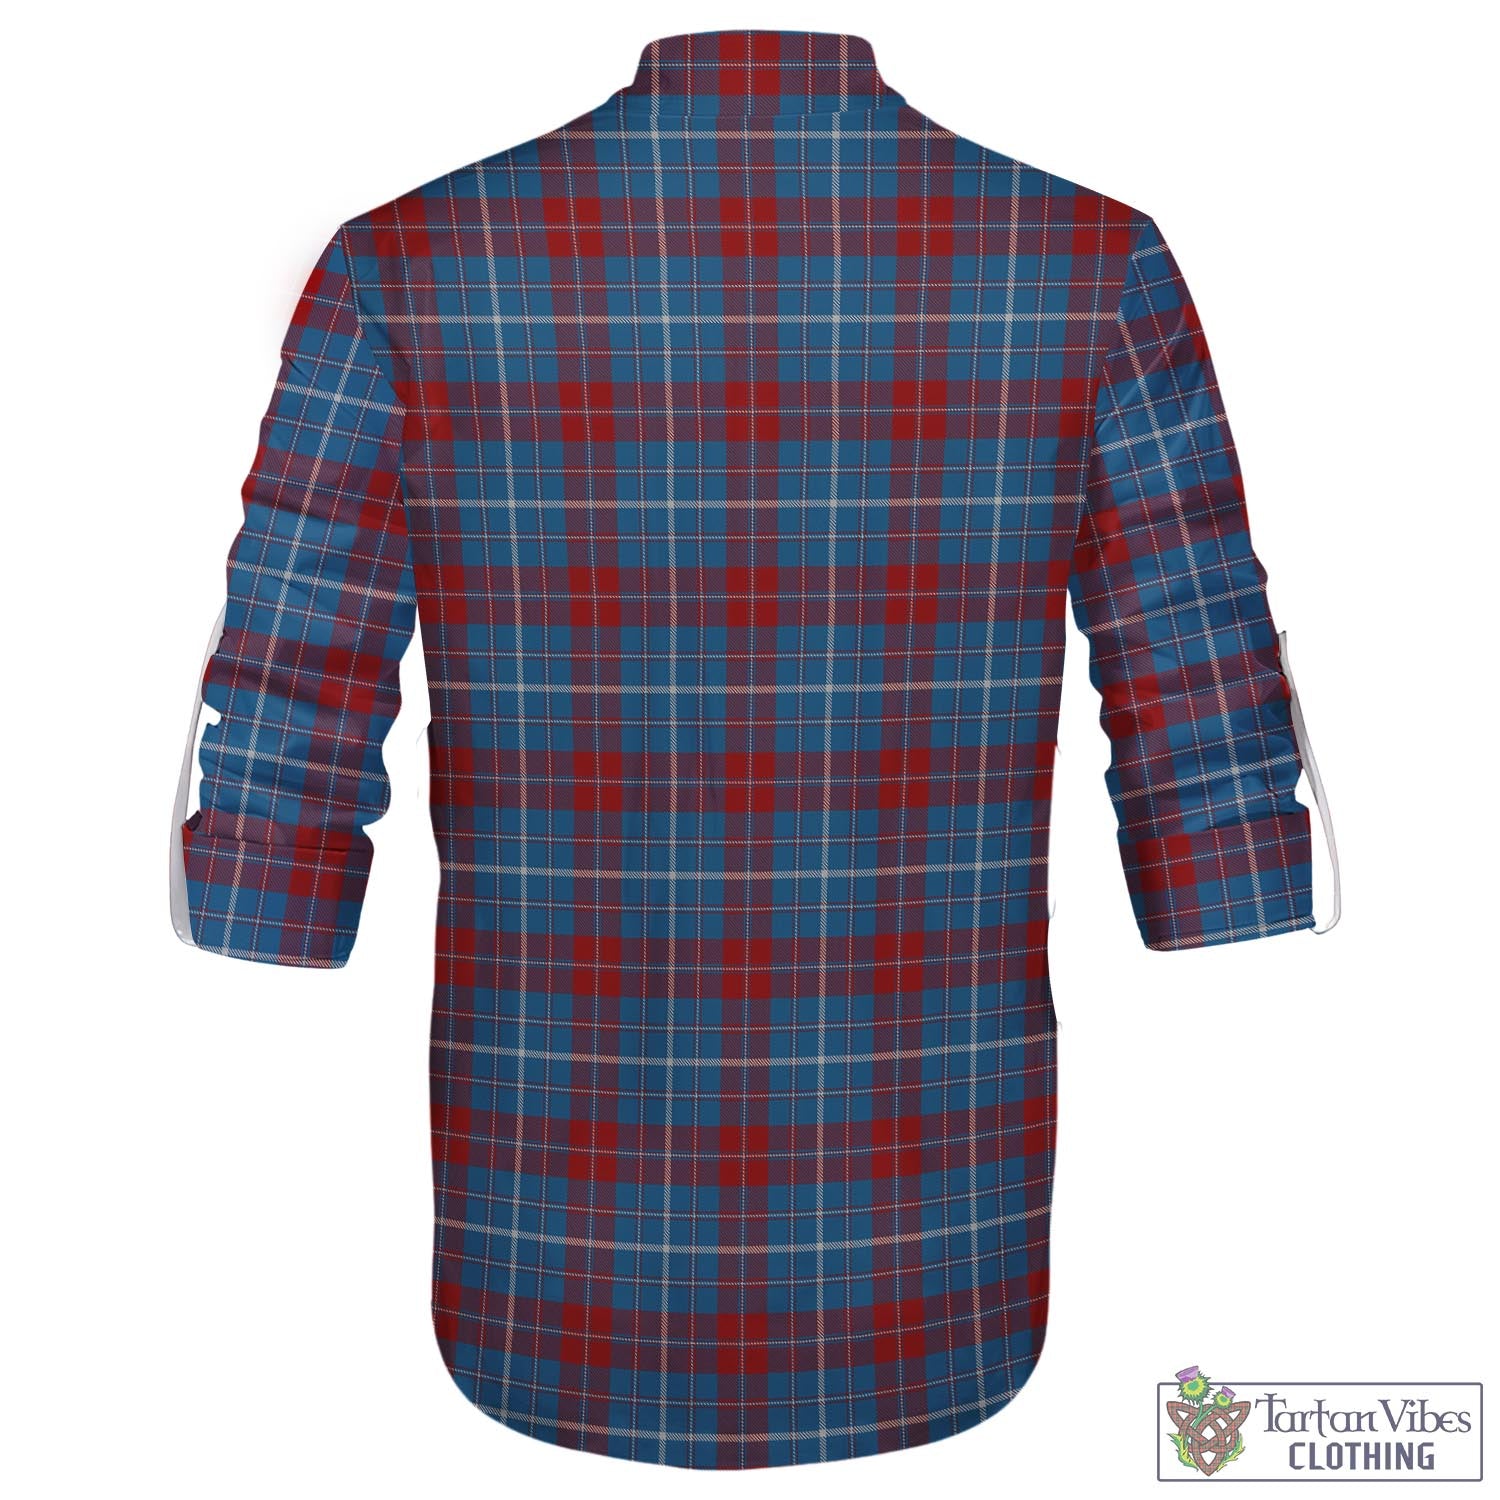 Tartan Vibes Clothing Frame Tartan Men's Scottish Traditional Jacobite Ghillie Kilt Shirt